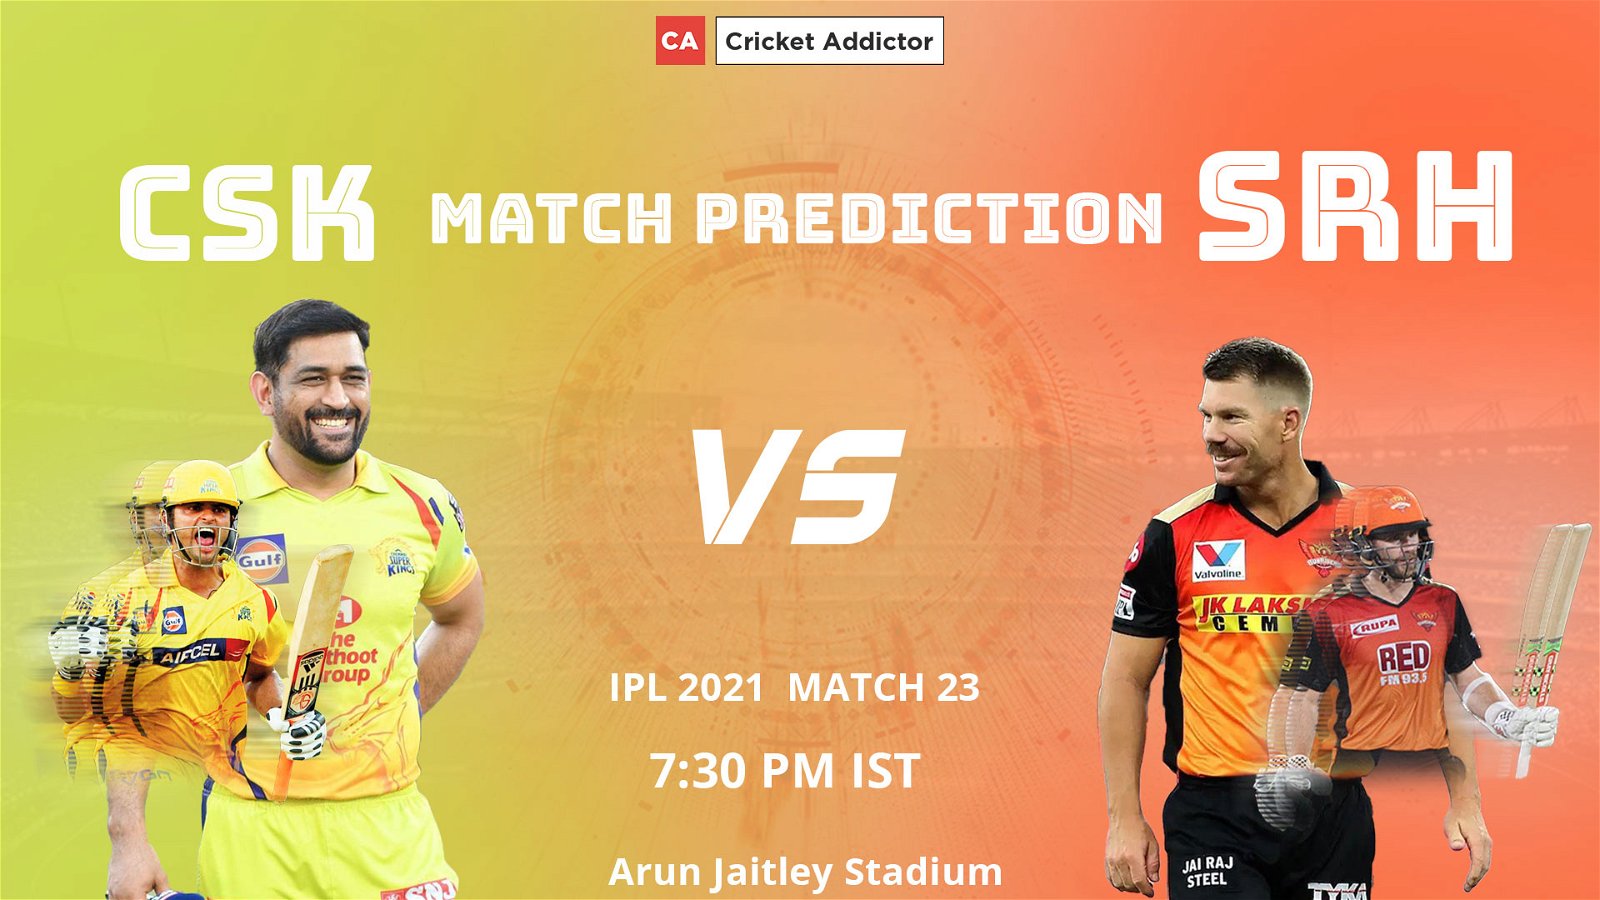 IPL 2021, CSK vs SRH, Match Prediction, CSK, SRH, Who Will Win The Match, Who Will Score Most Runs, Who Will Pick Most Wickets